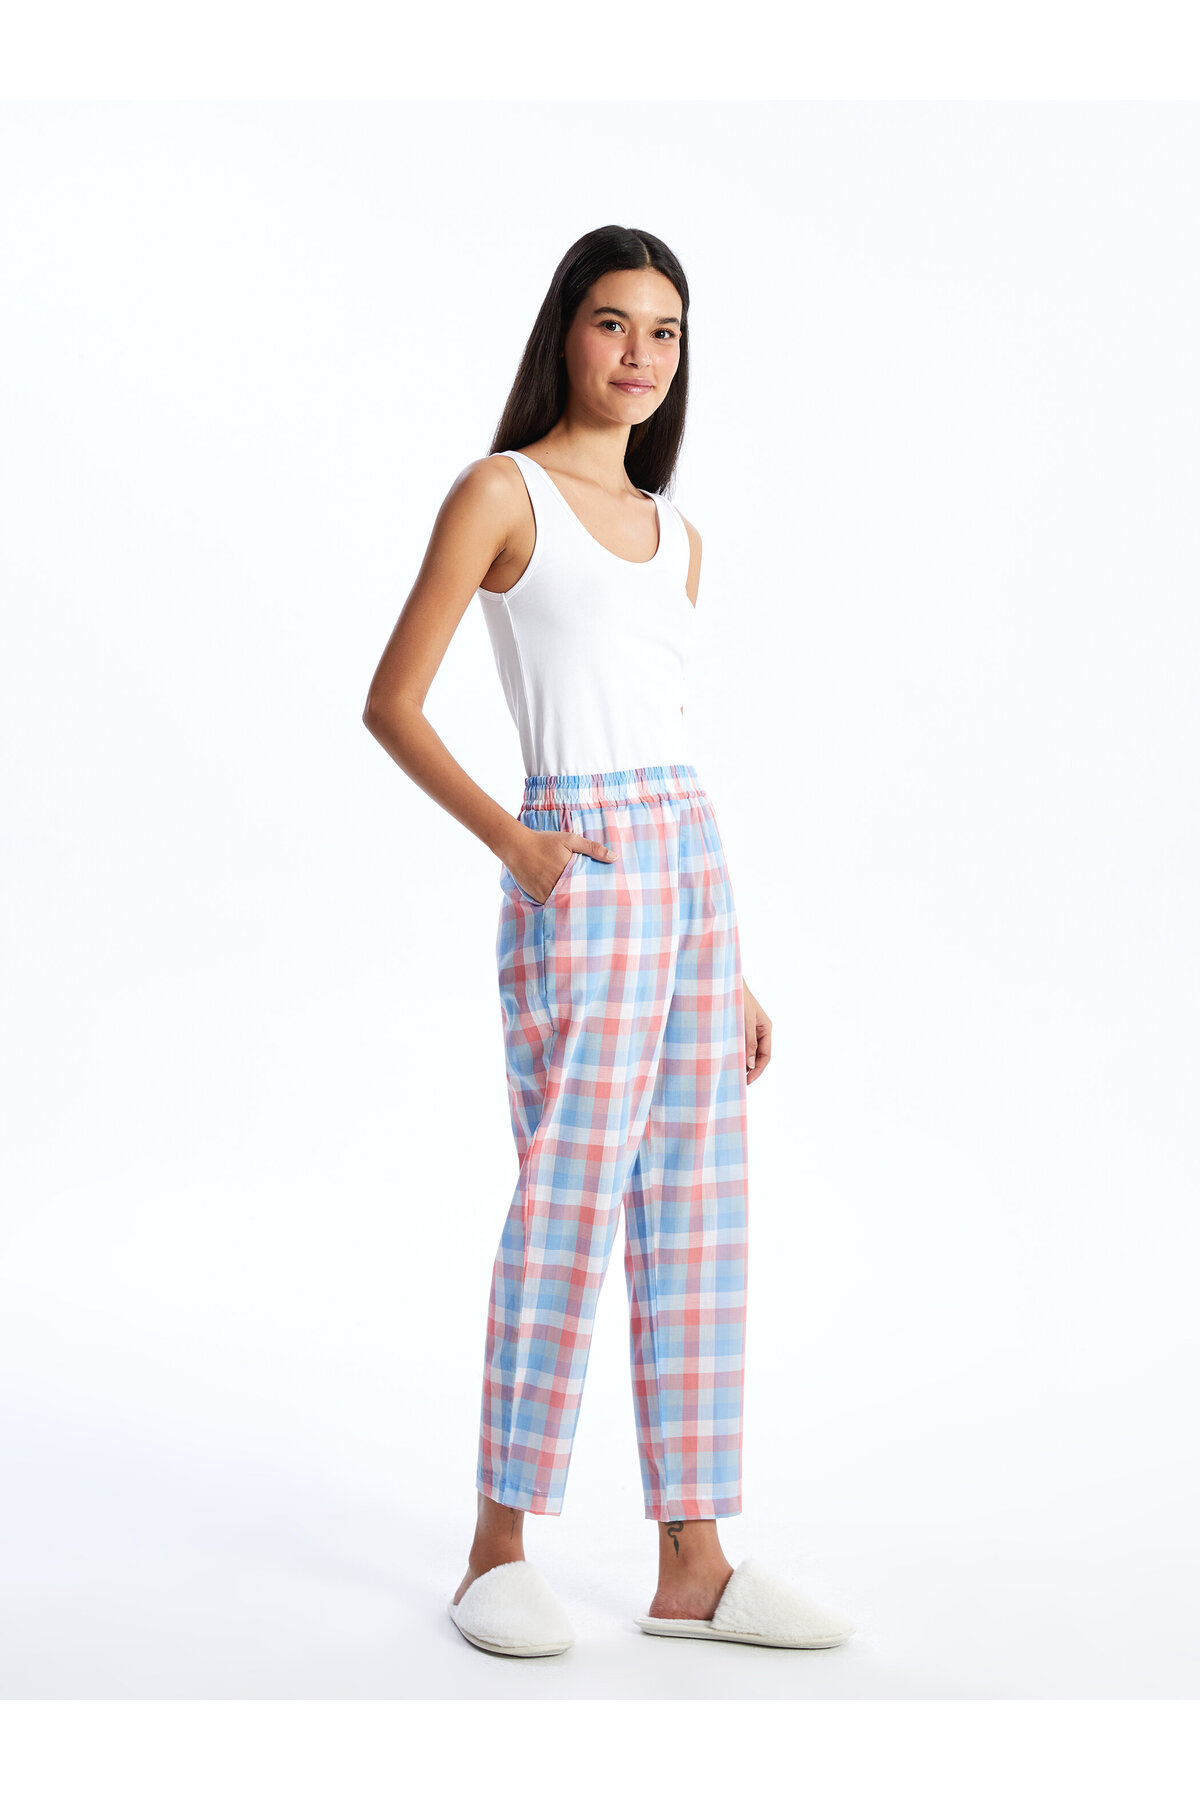 LC Waikiki Women's Elastic Waist Patterned Pajama Bottoms